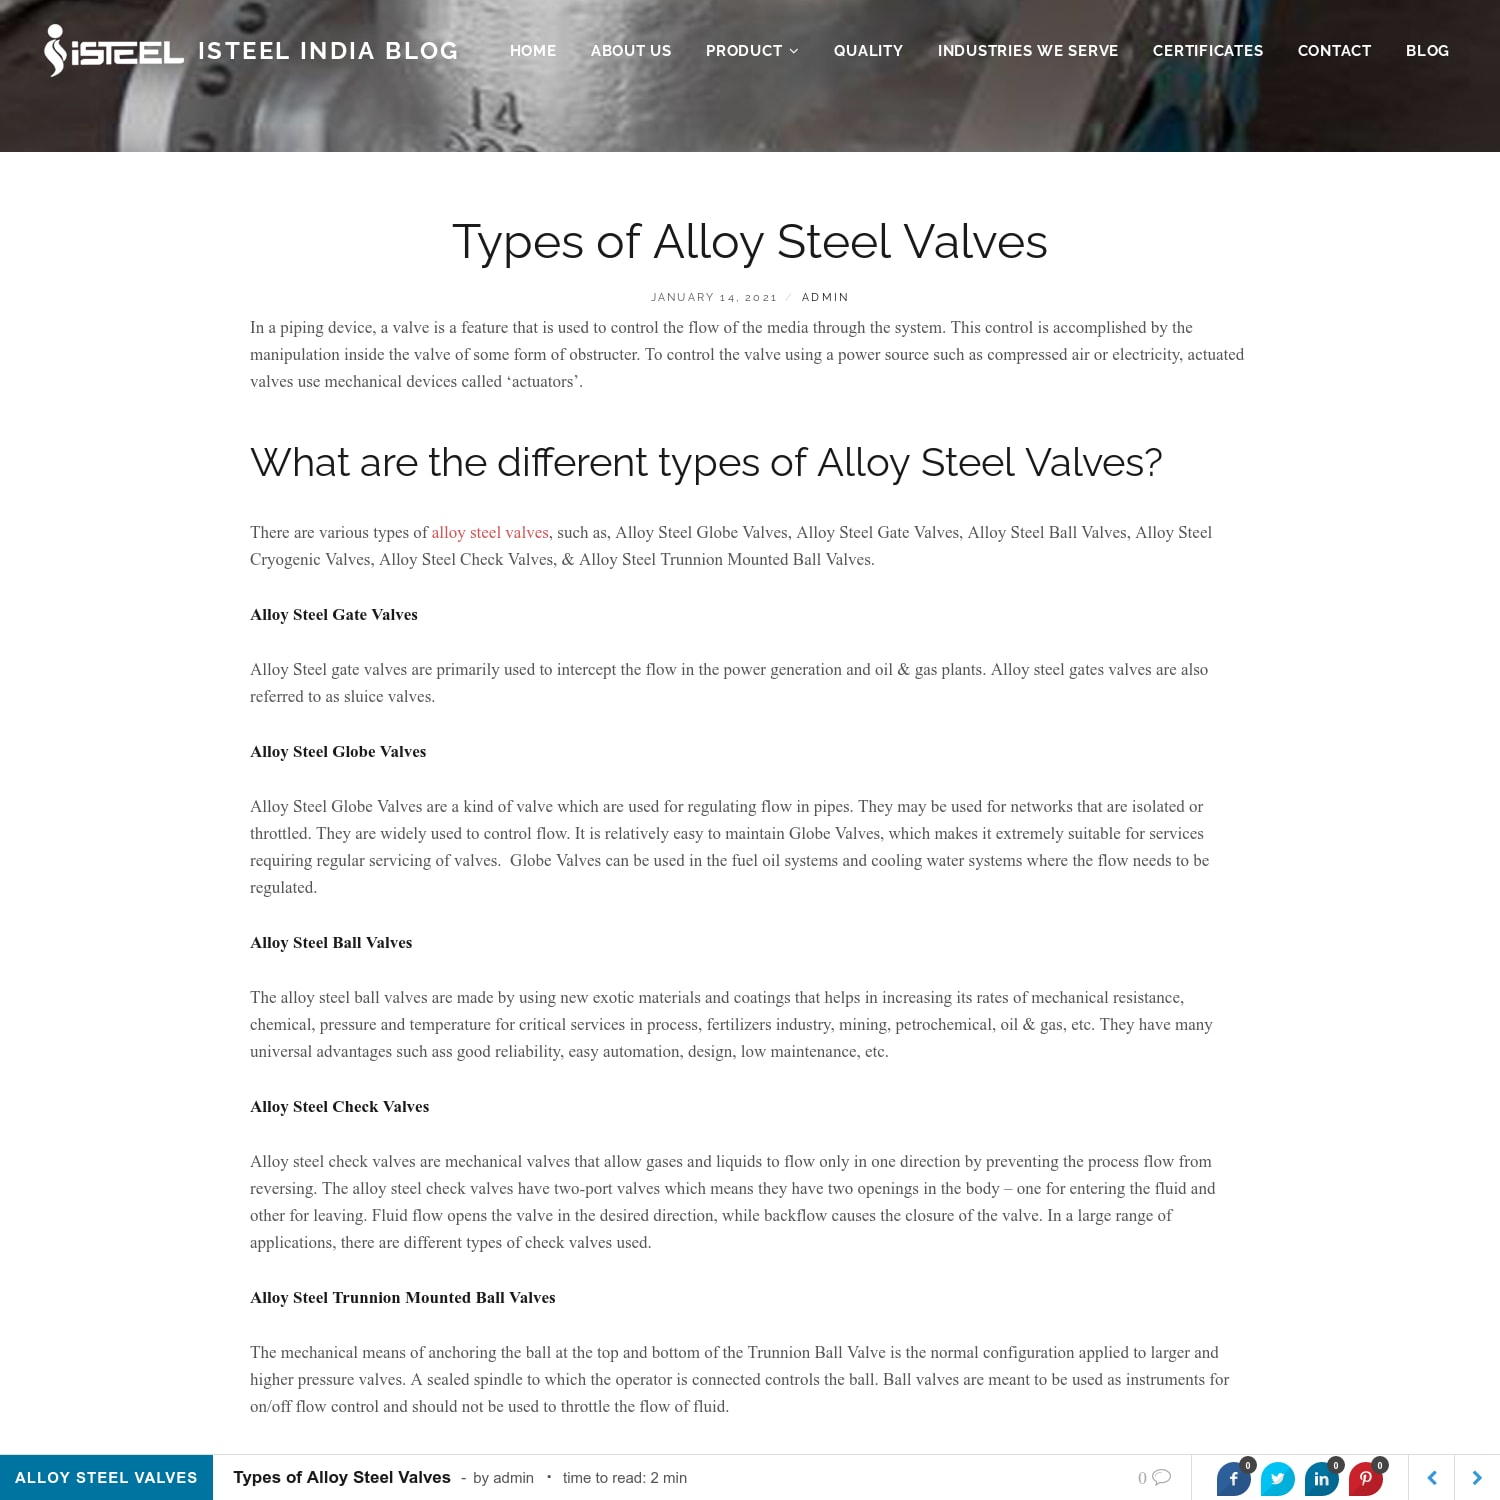 Types of Alloy Steel Valves